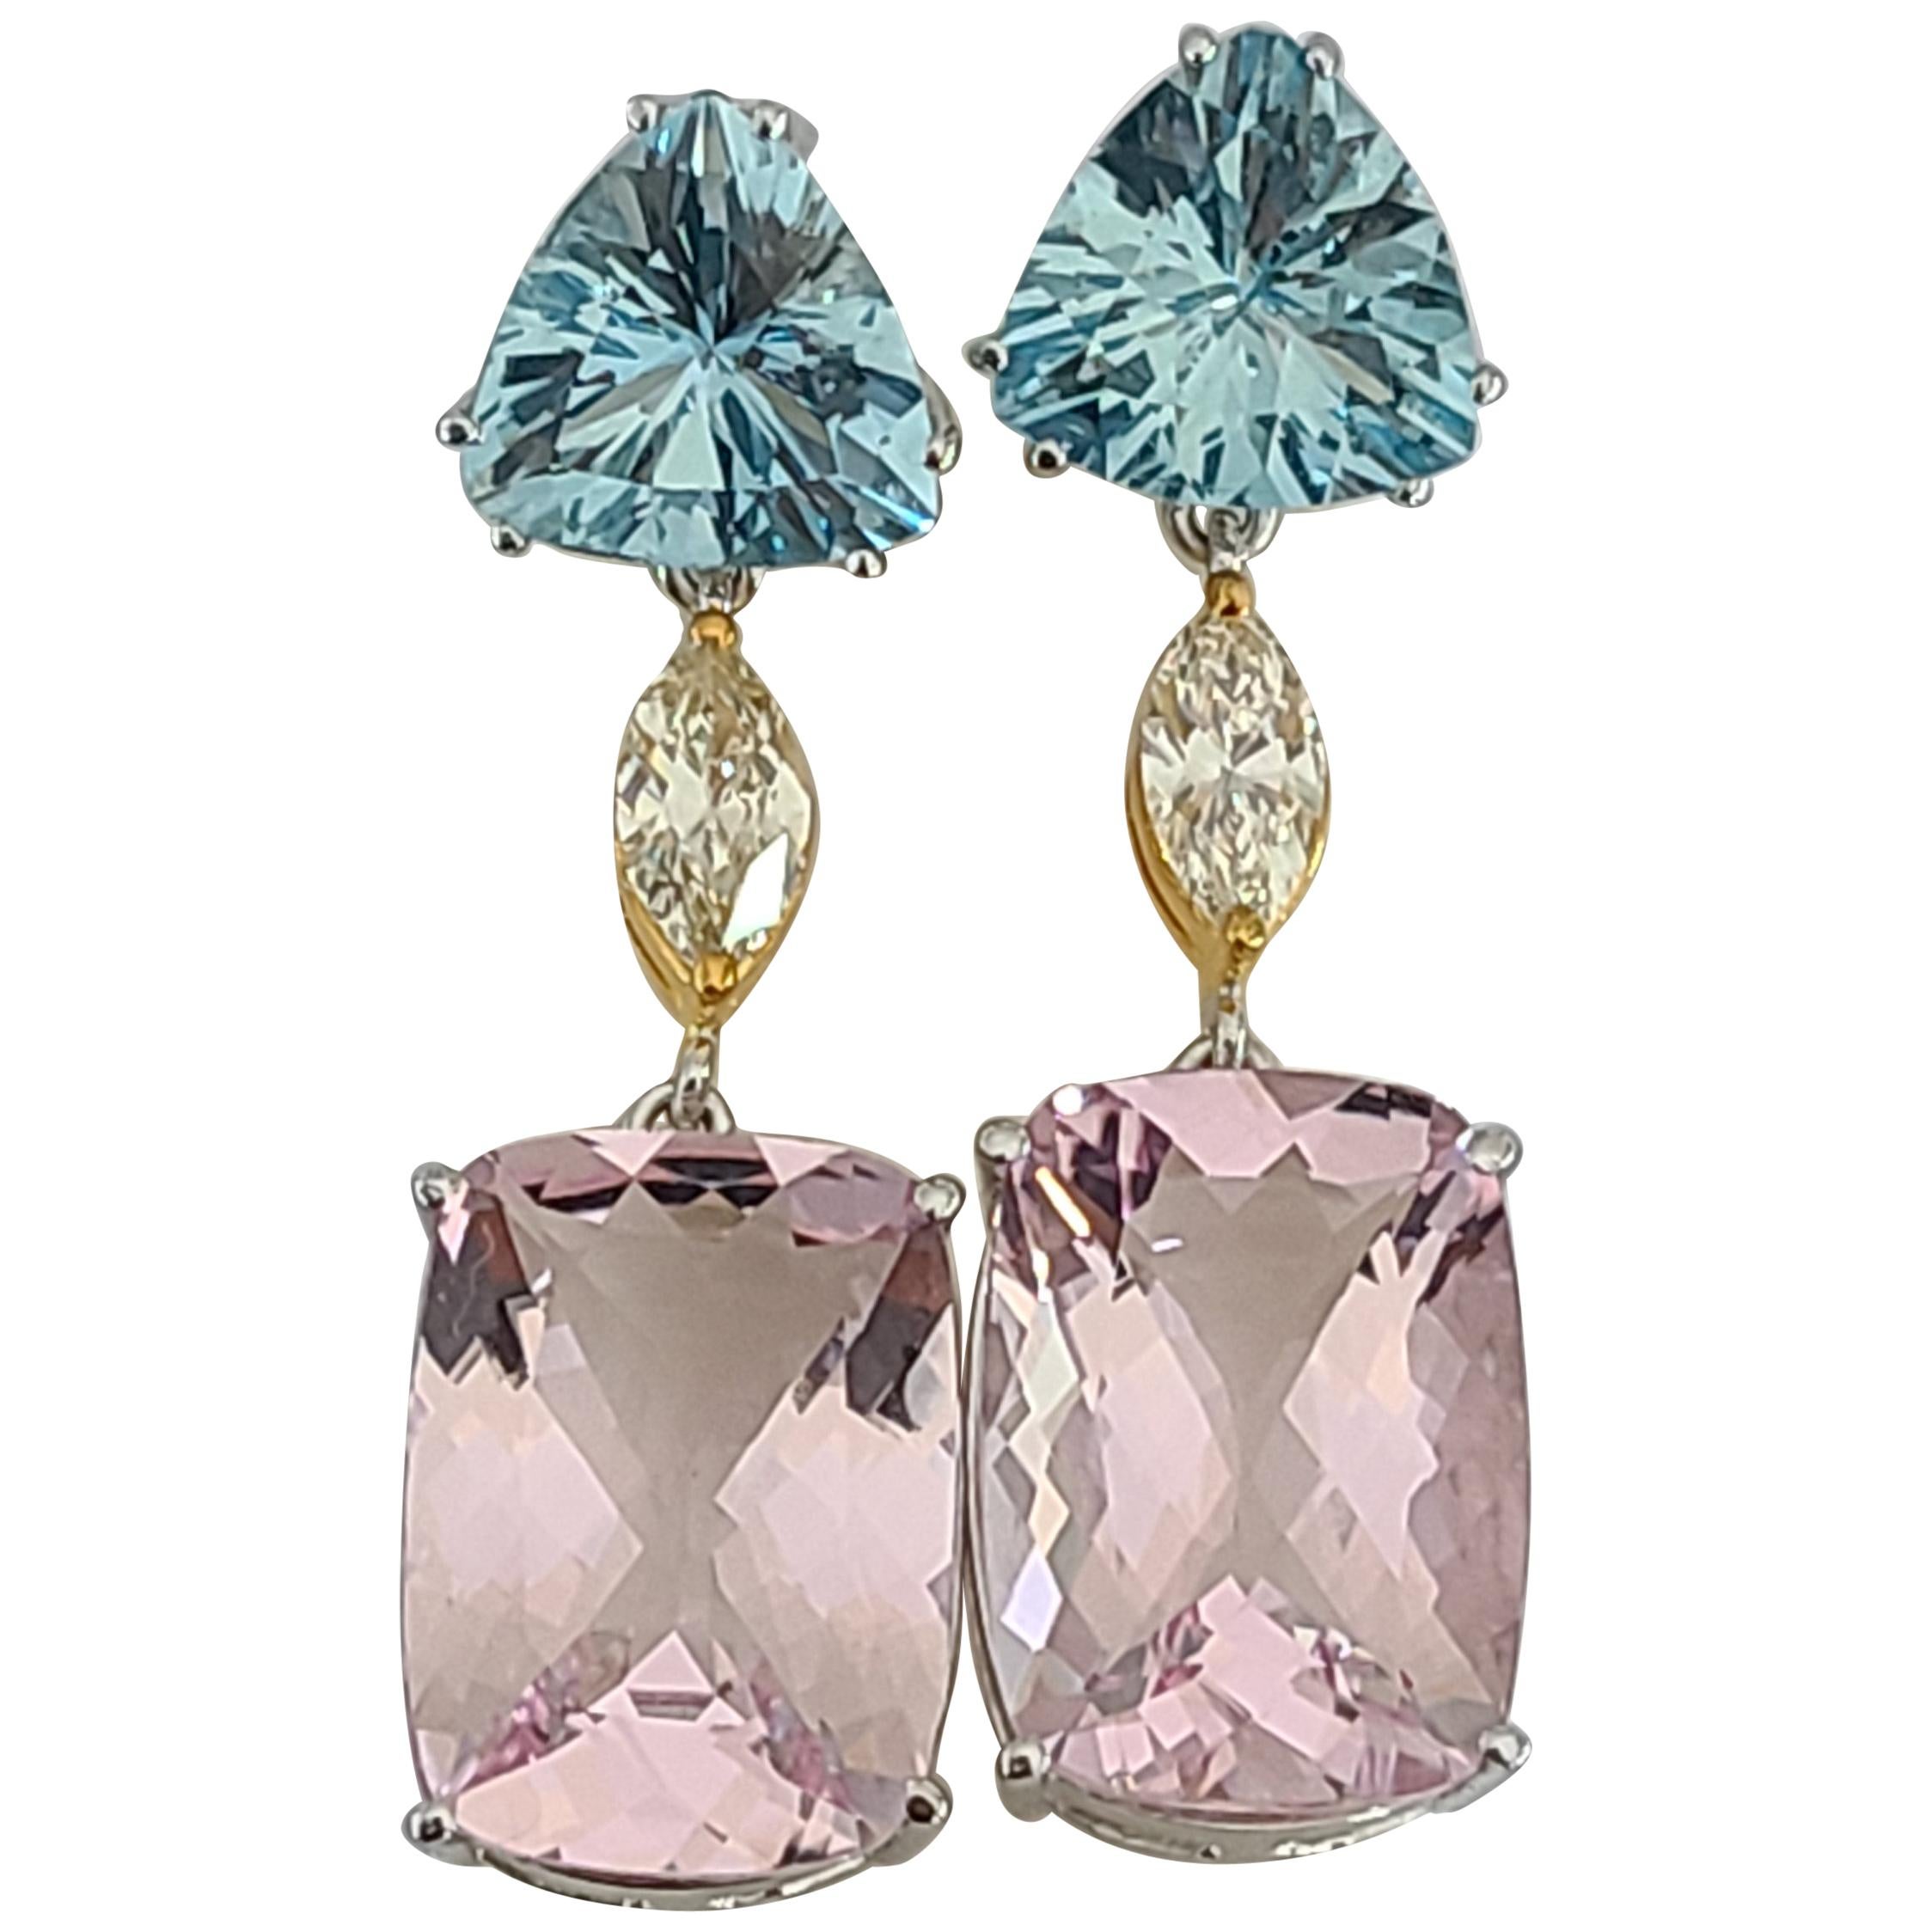 Aquamarine and Morganite Earrings in 18 Karat Gold with Diamonds